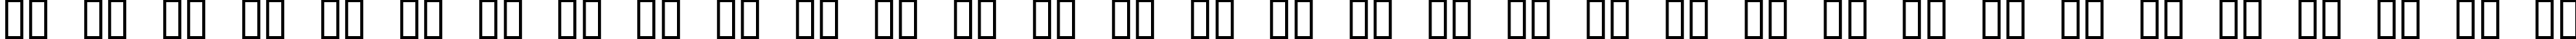 Пример написания русского алфавита шрифтом Quake & Shake